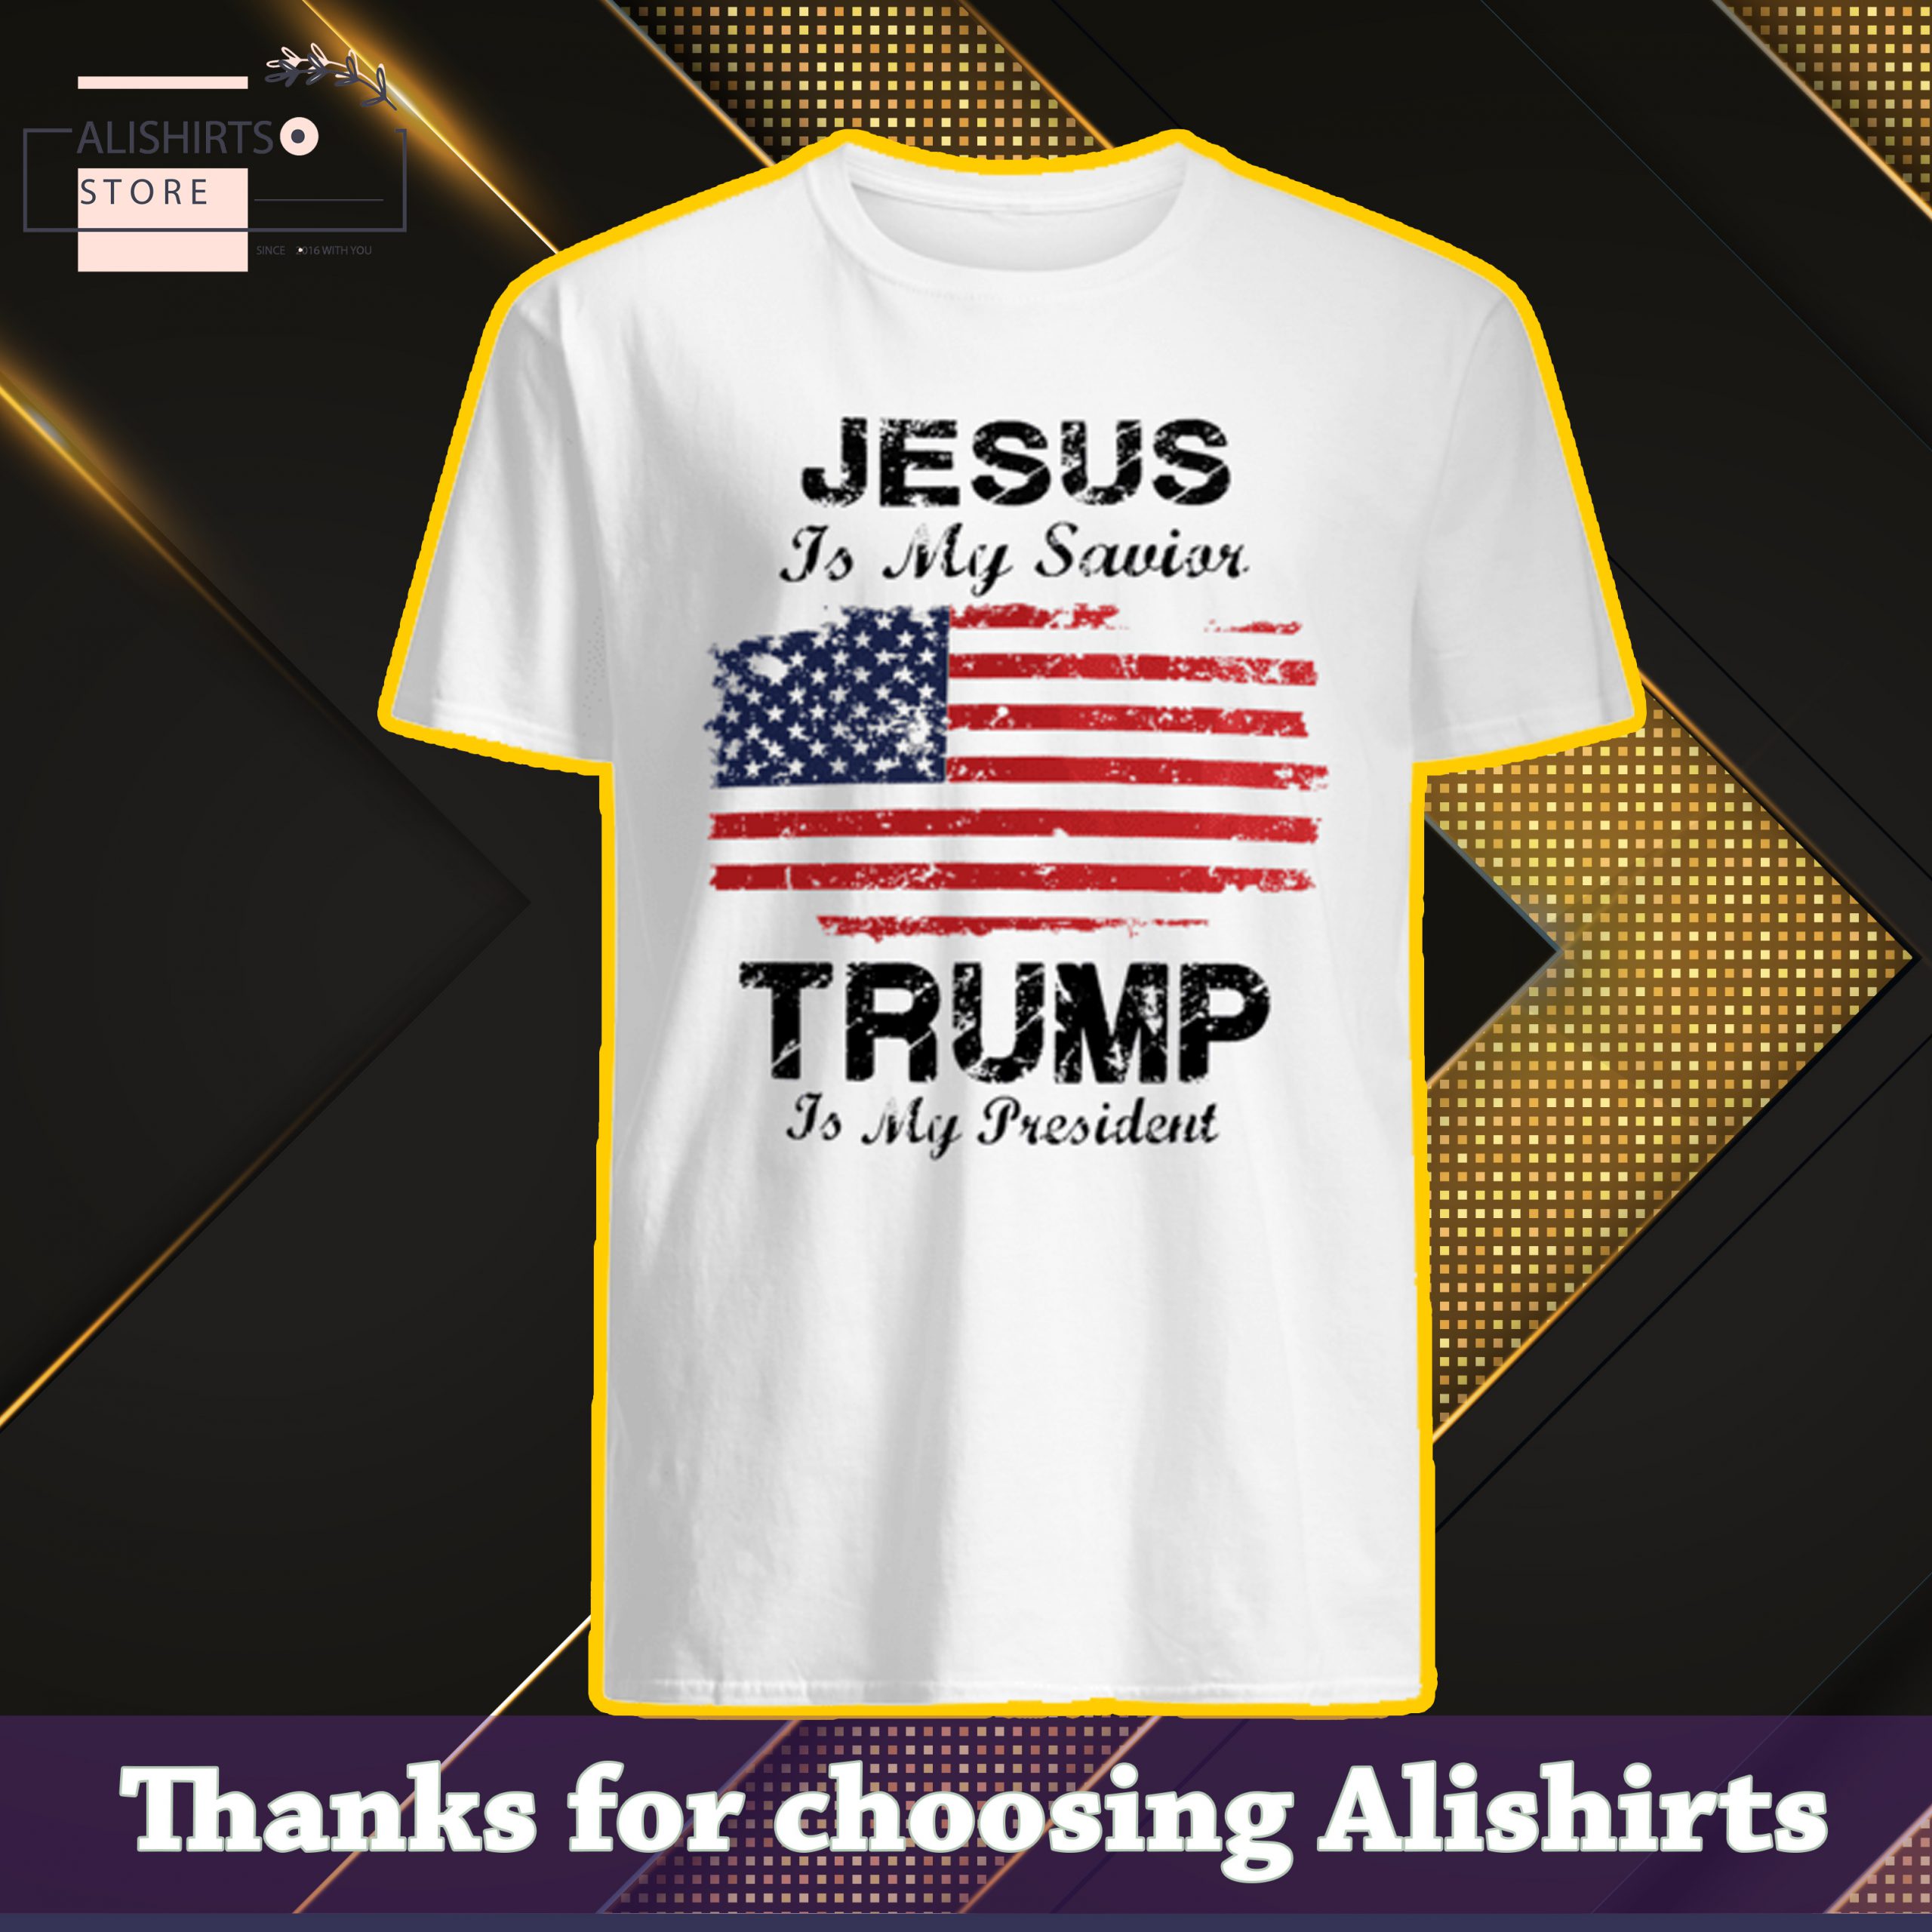 Jesus is my savior Trump is my president American flag shirt